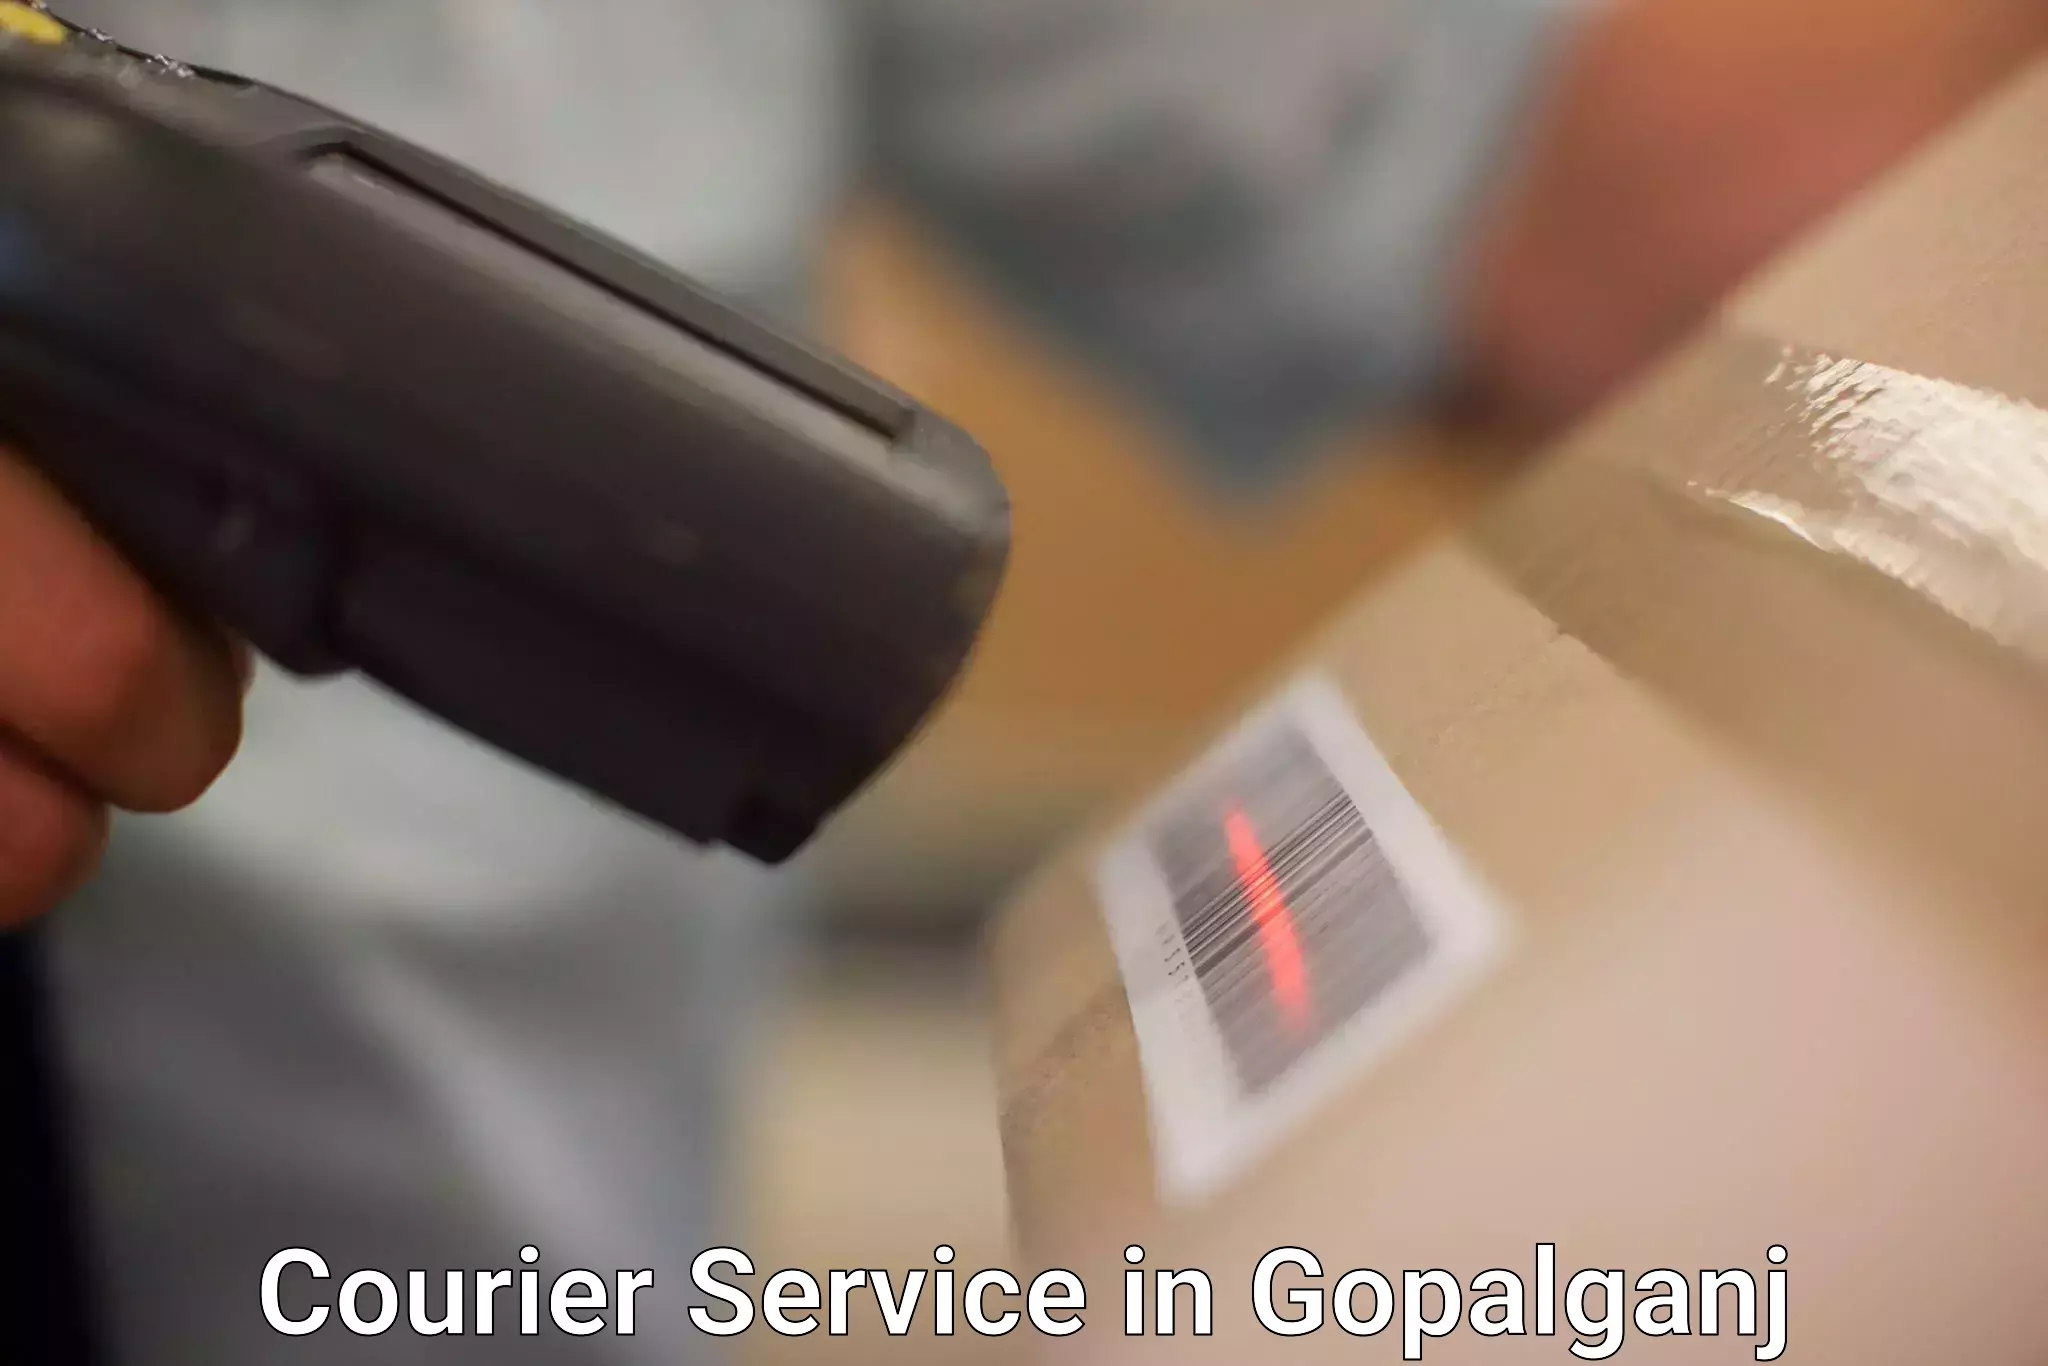 Full-service courier options in Gopalganj